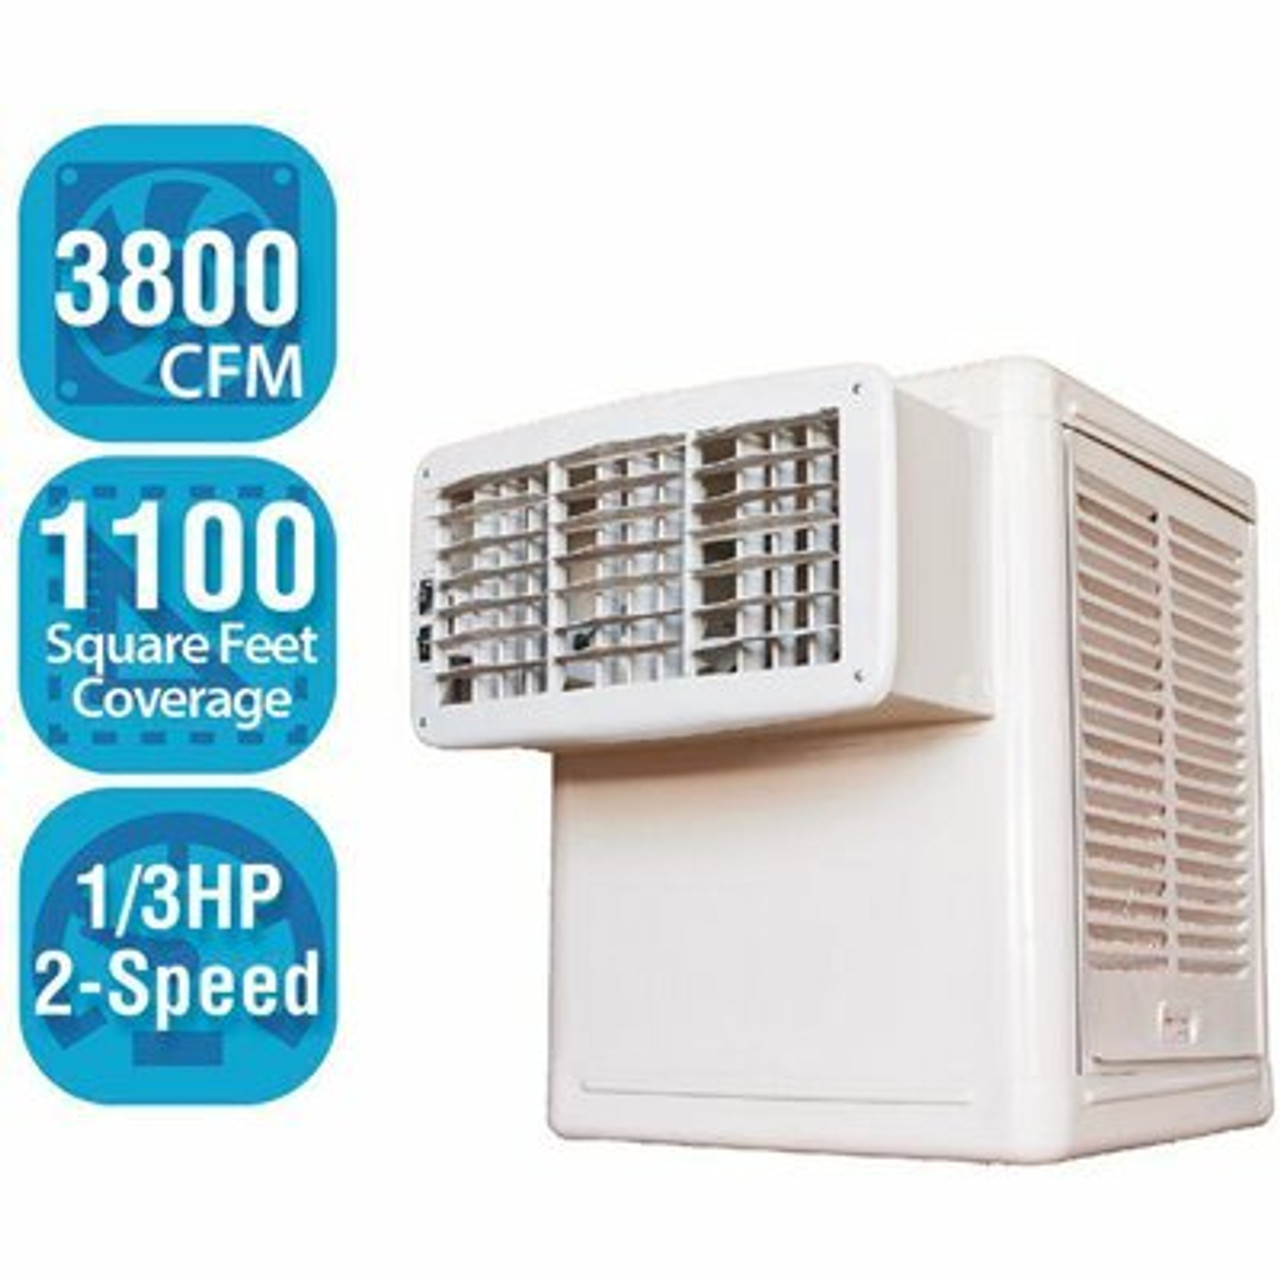 Hessaire 3,800 Cfm 115-Volt 2-Speed Front Discharge Window Evaporative Cooler For 1100 Sq. Ft. (With Motor)